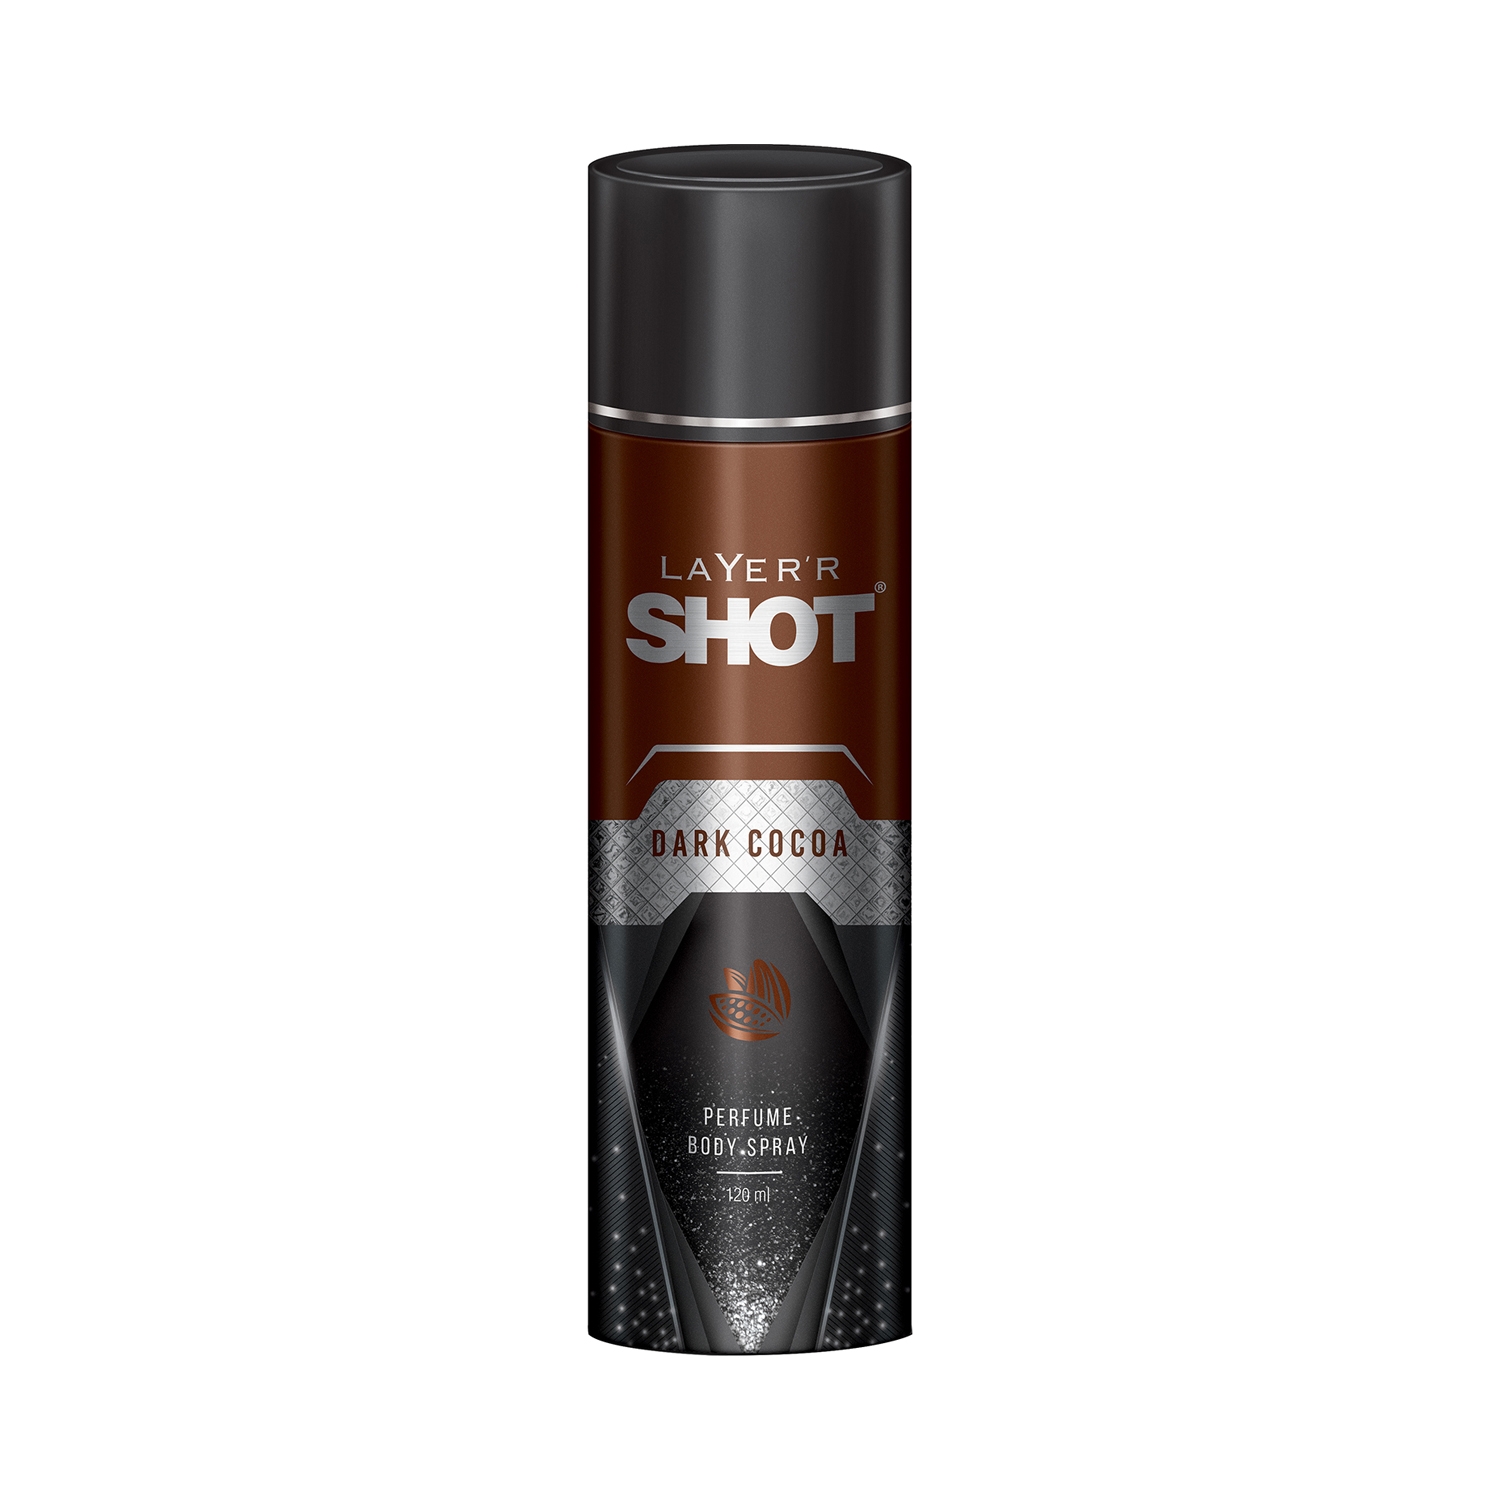 Layer'r Shot | Layer'r Shot Dark Cocoa Perfume Body Spray (120ml)